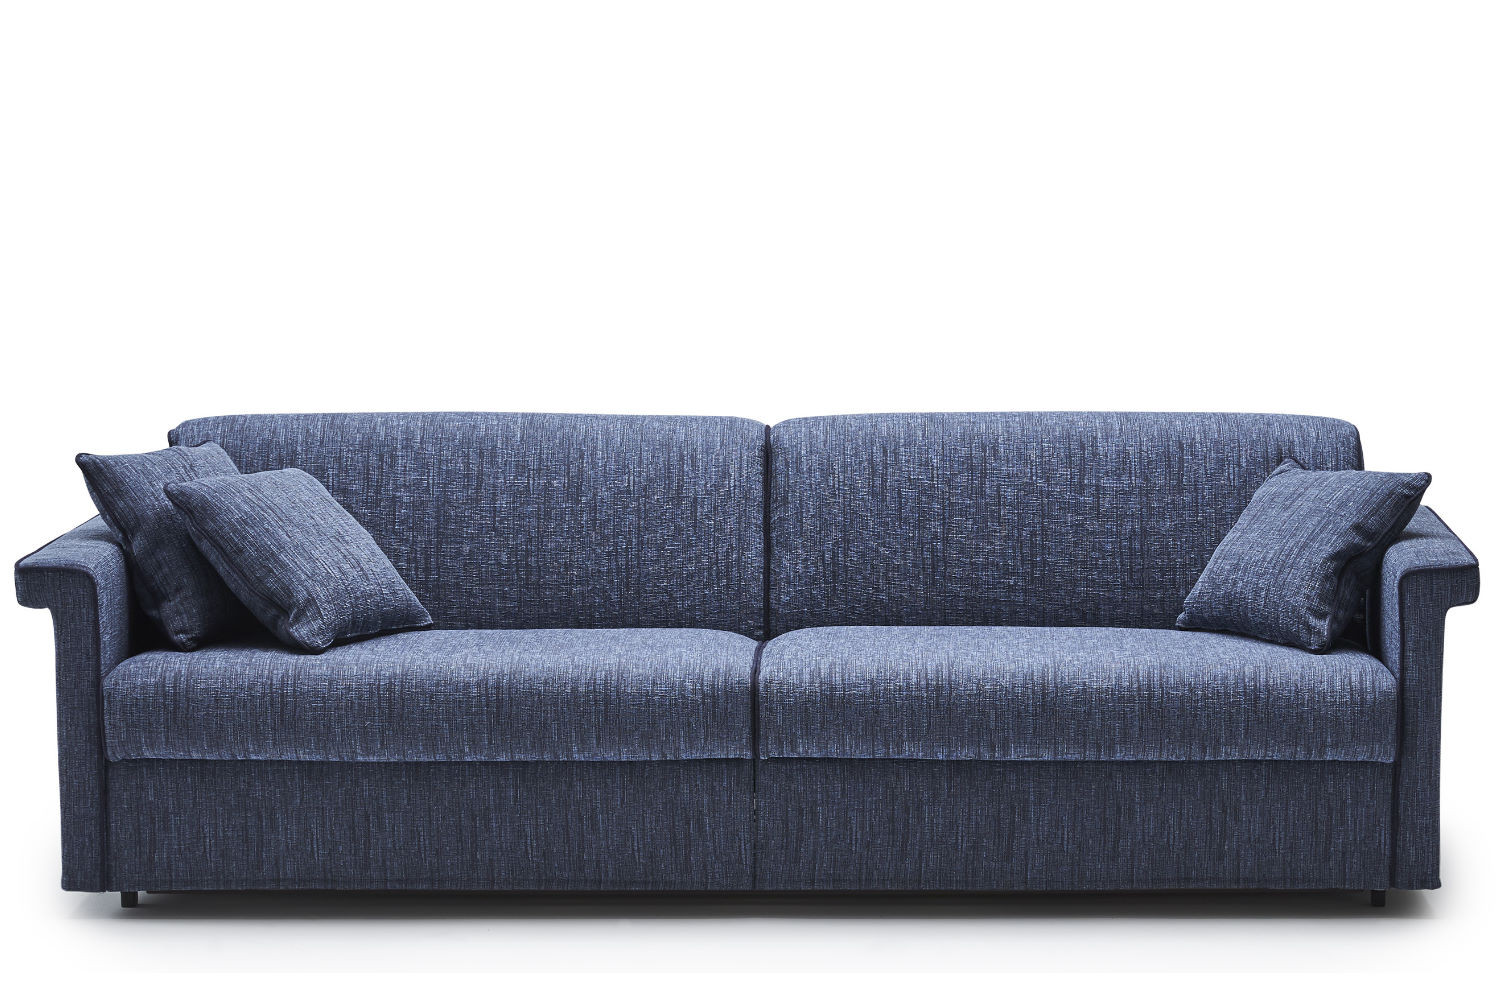 king size sofa bed amazon